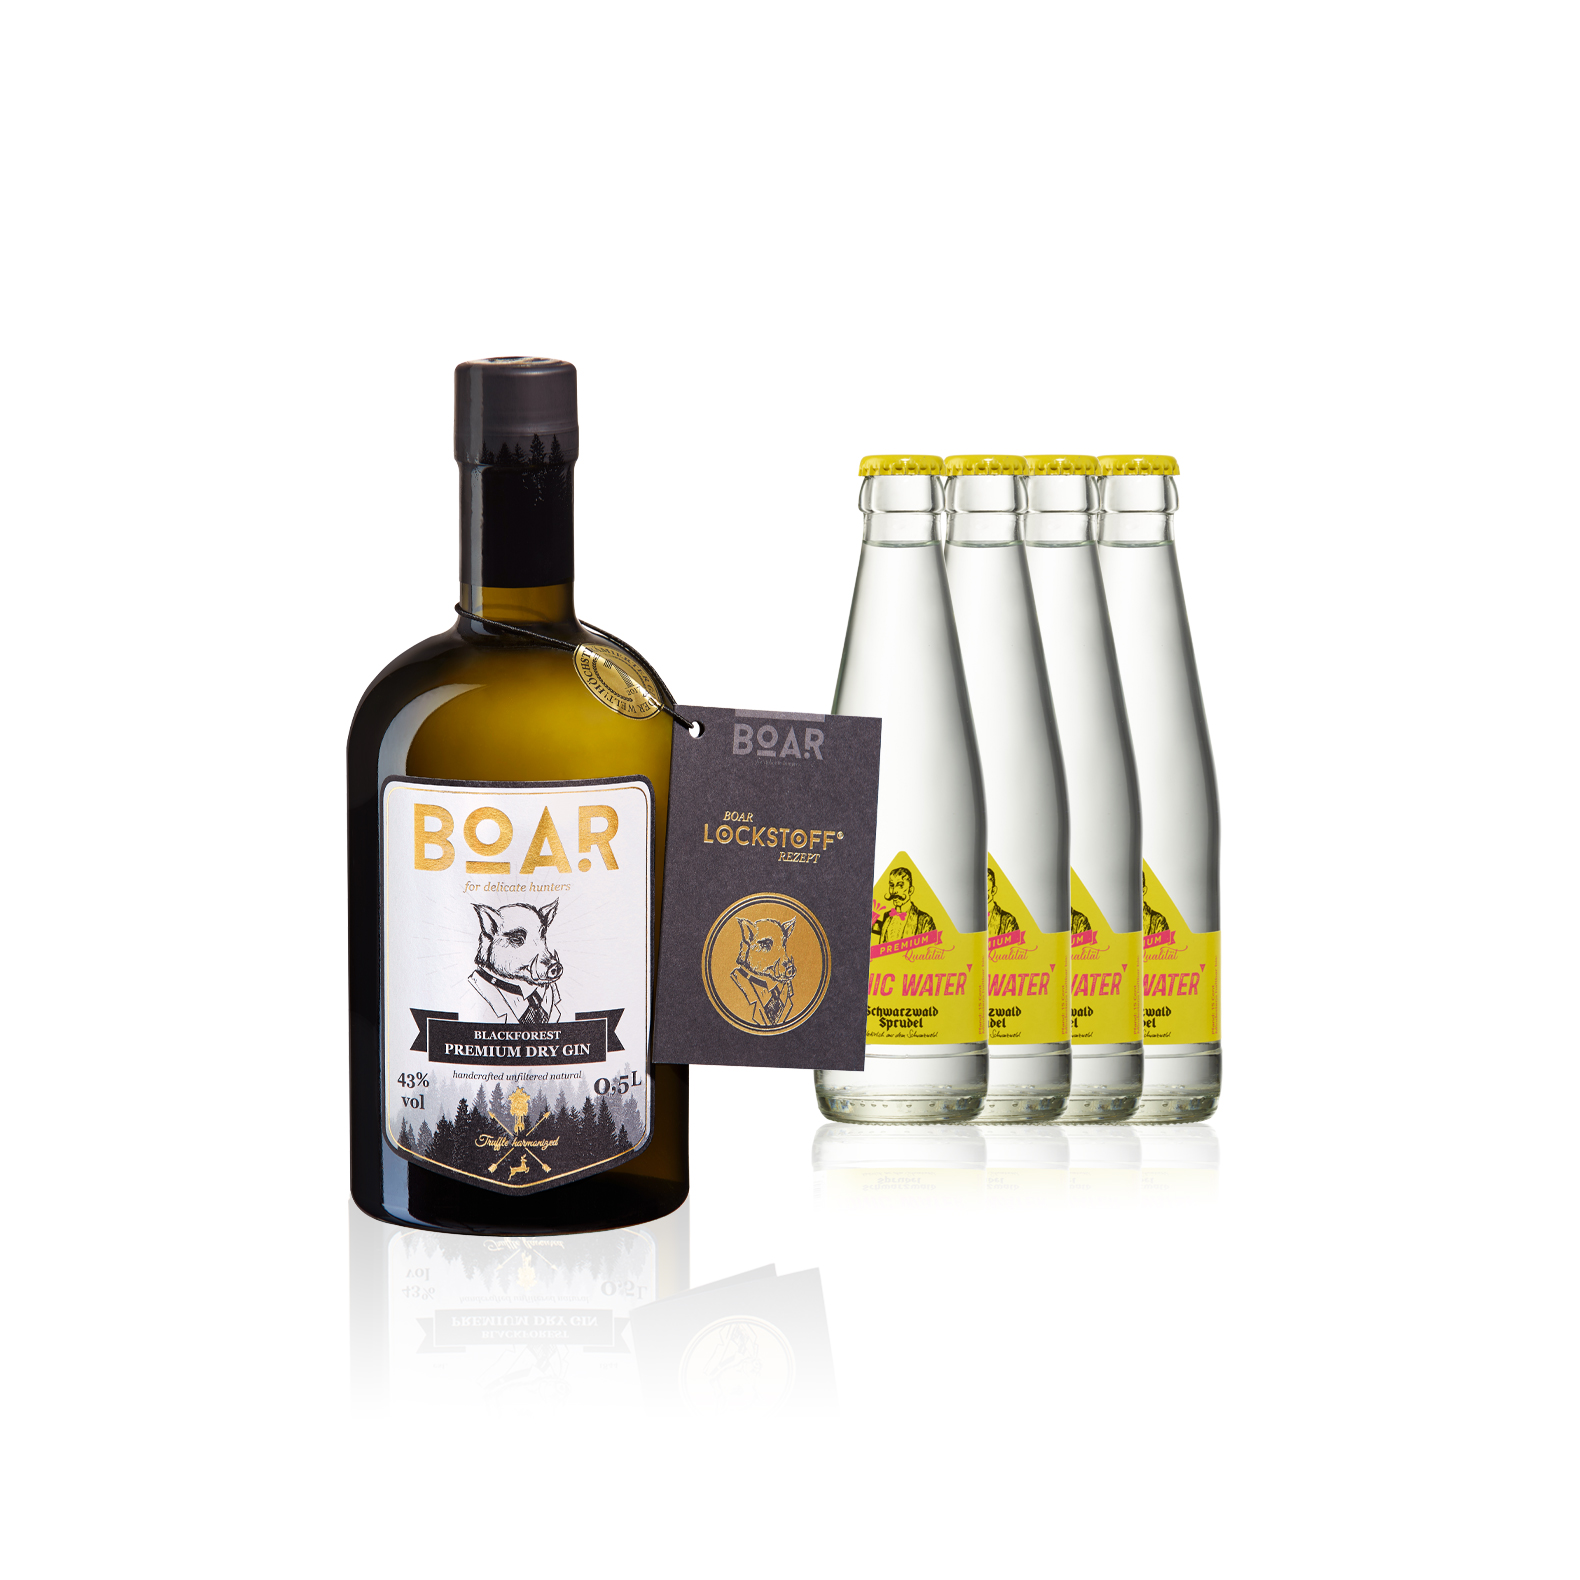 BOAR Gin® 0,5l 43% Vol - Heimat Bundle mit Schwarzwald Tonic - BOAR Gin® -  Höchstprämierter Gin der Welt